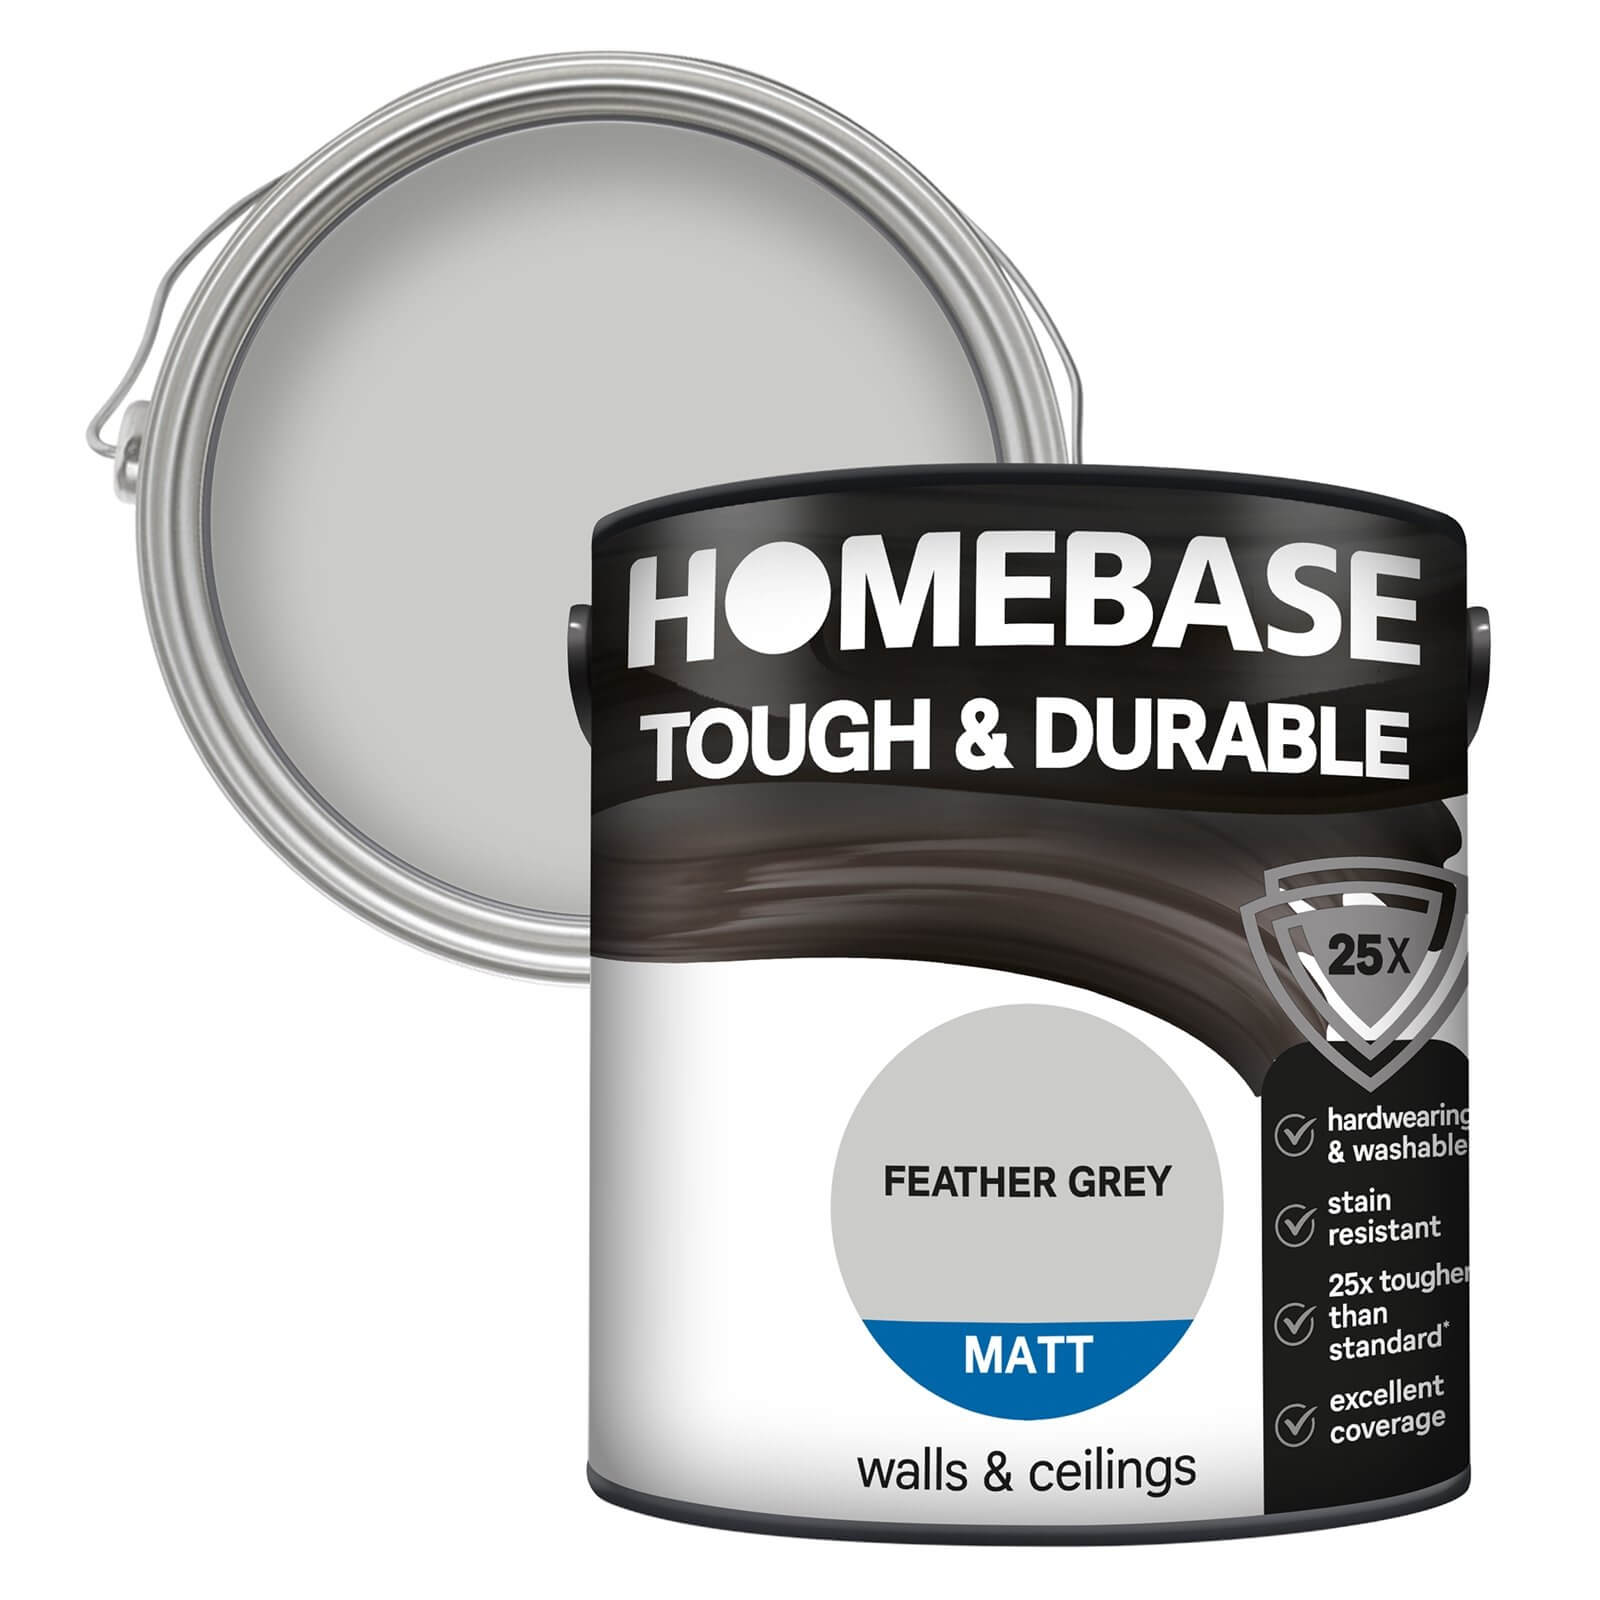 Homebase Tough & Durable Matt Paint Feather Grey - 2.5L